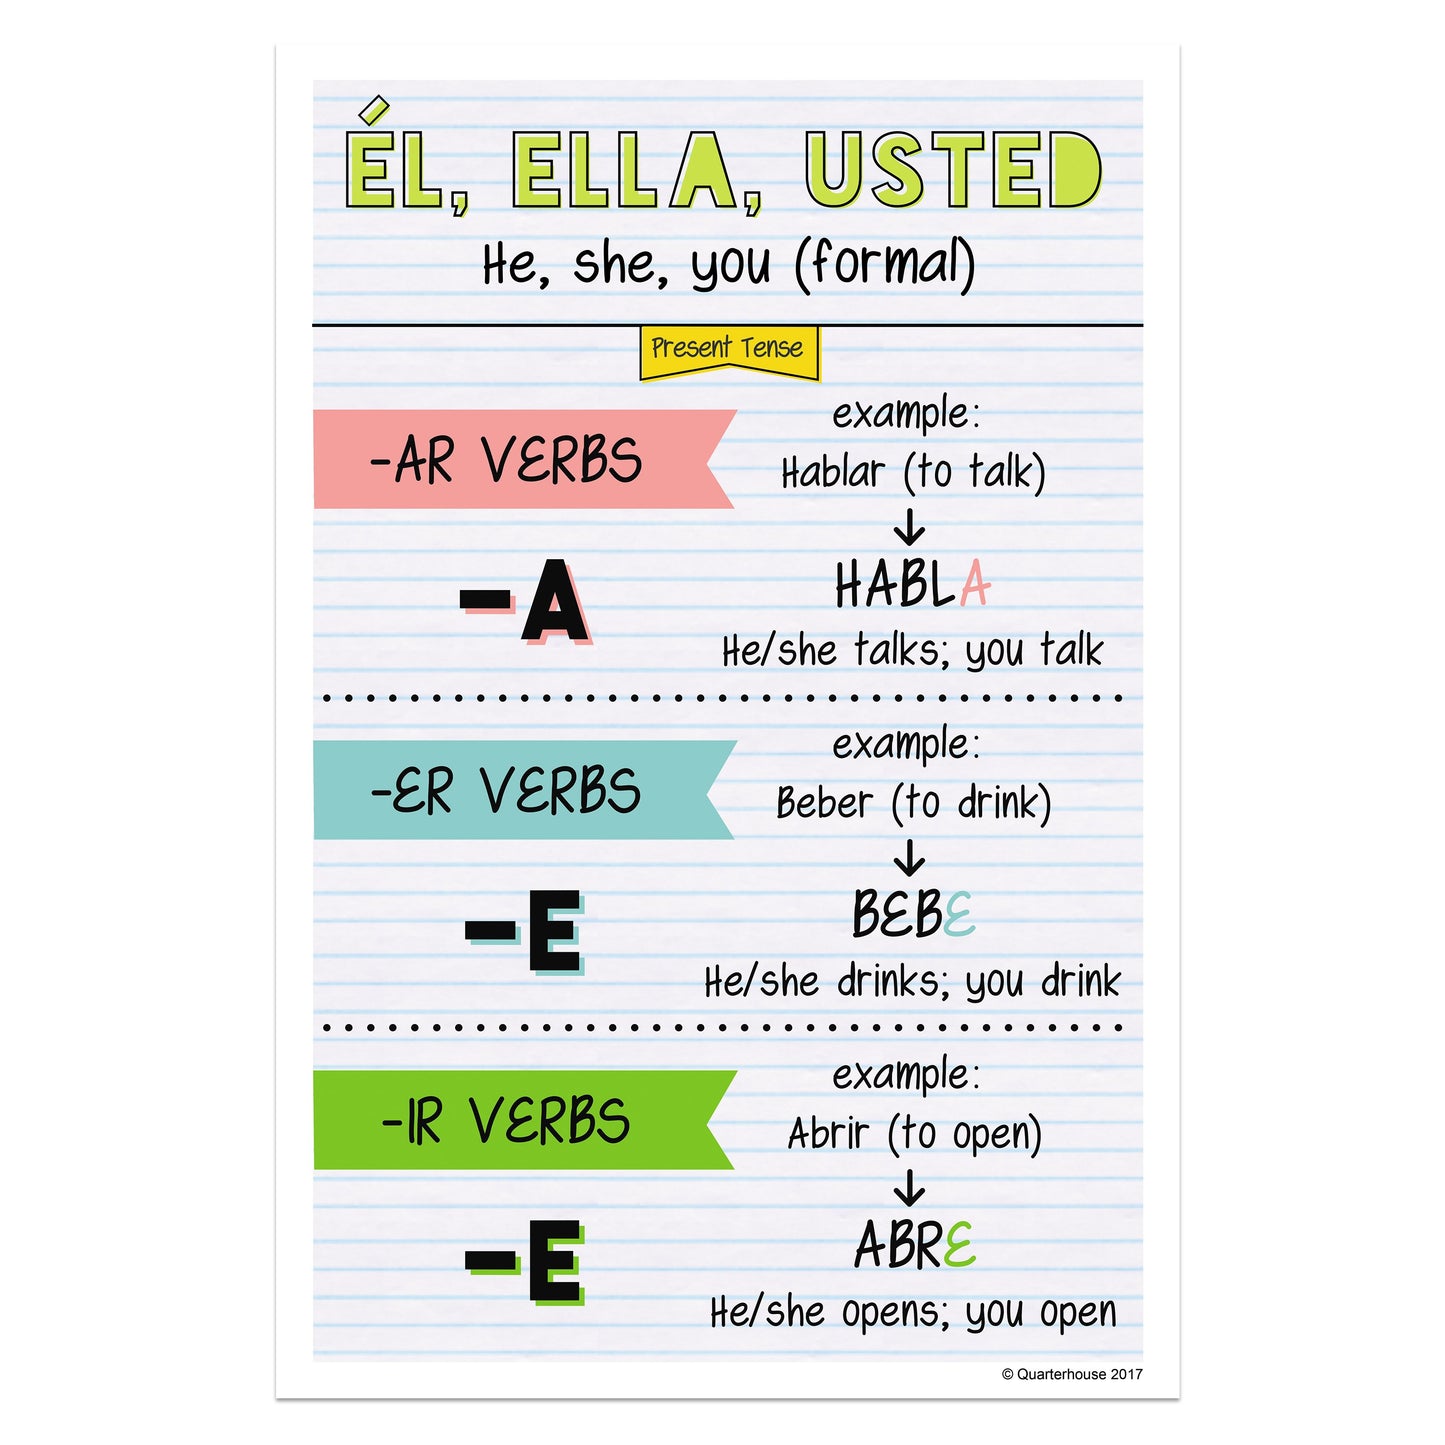 Quarterhouse Él, Ella, Usted - Present Tense Spanish Verb Conjugation (Light-Themed) Poster, Spanish and ESL Classroom Materials for Teachers